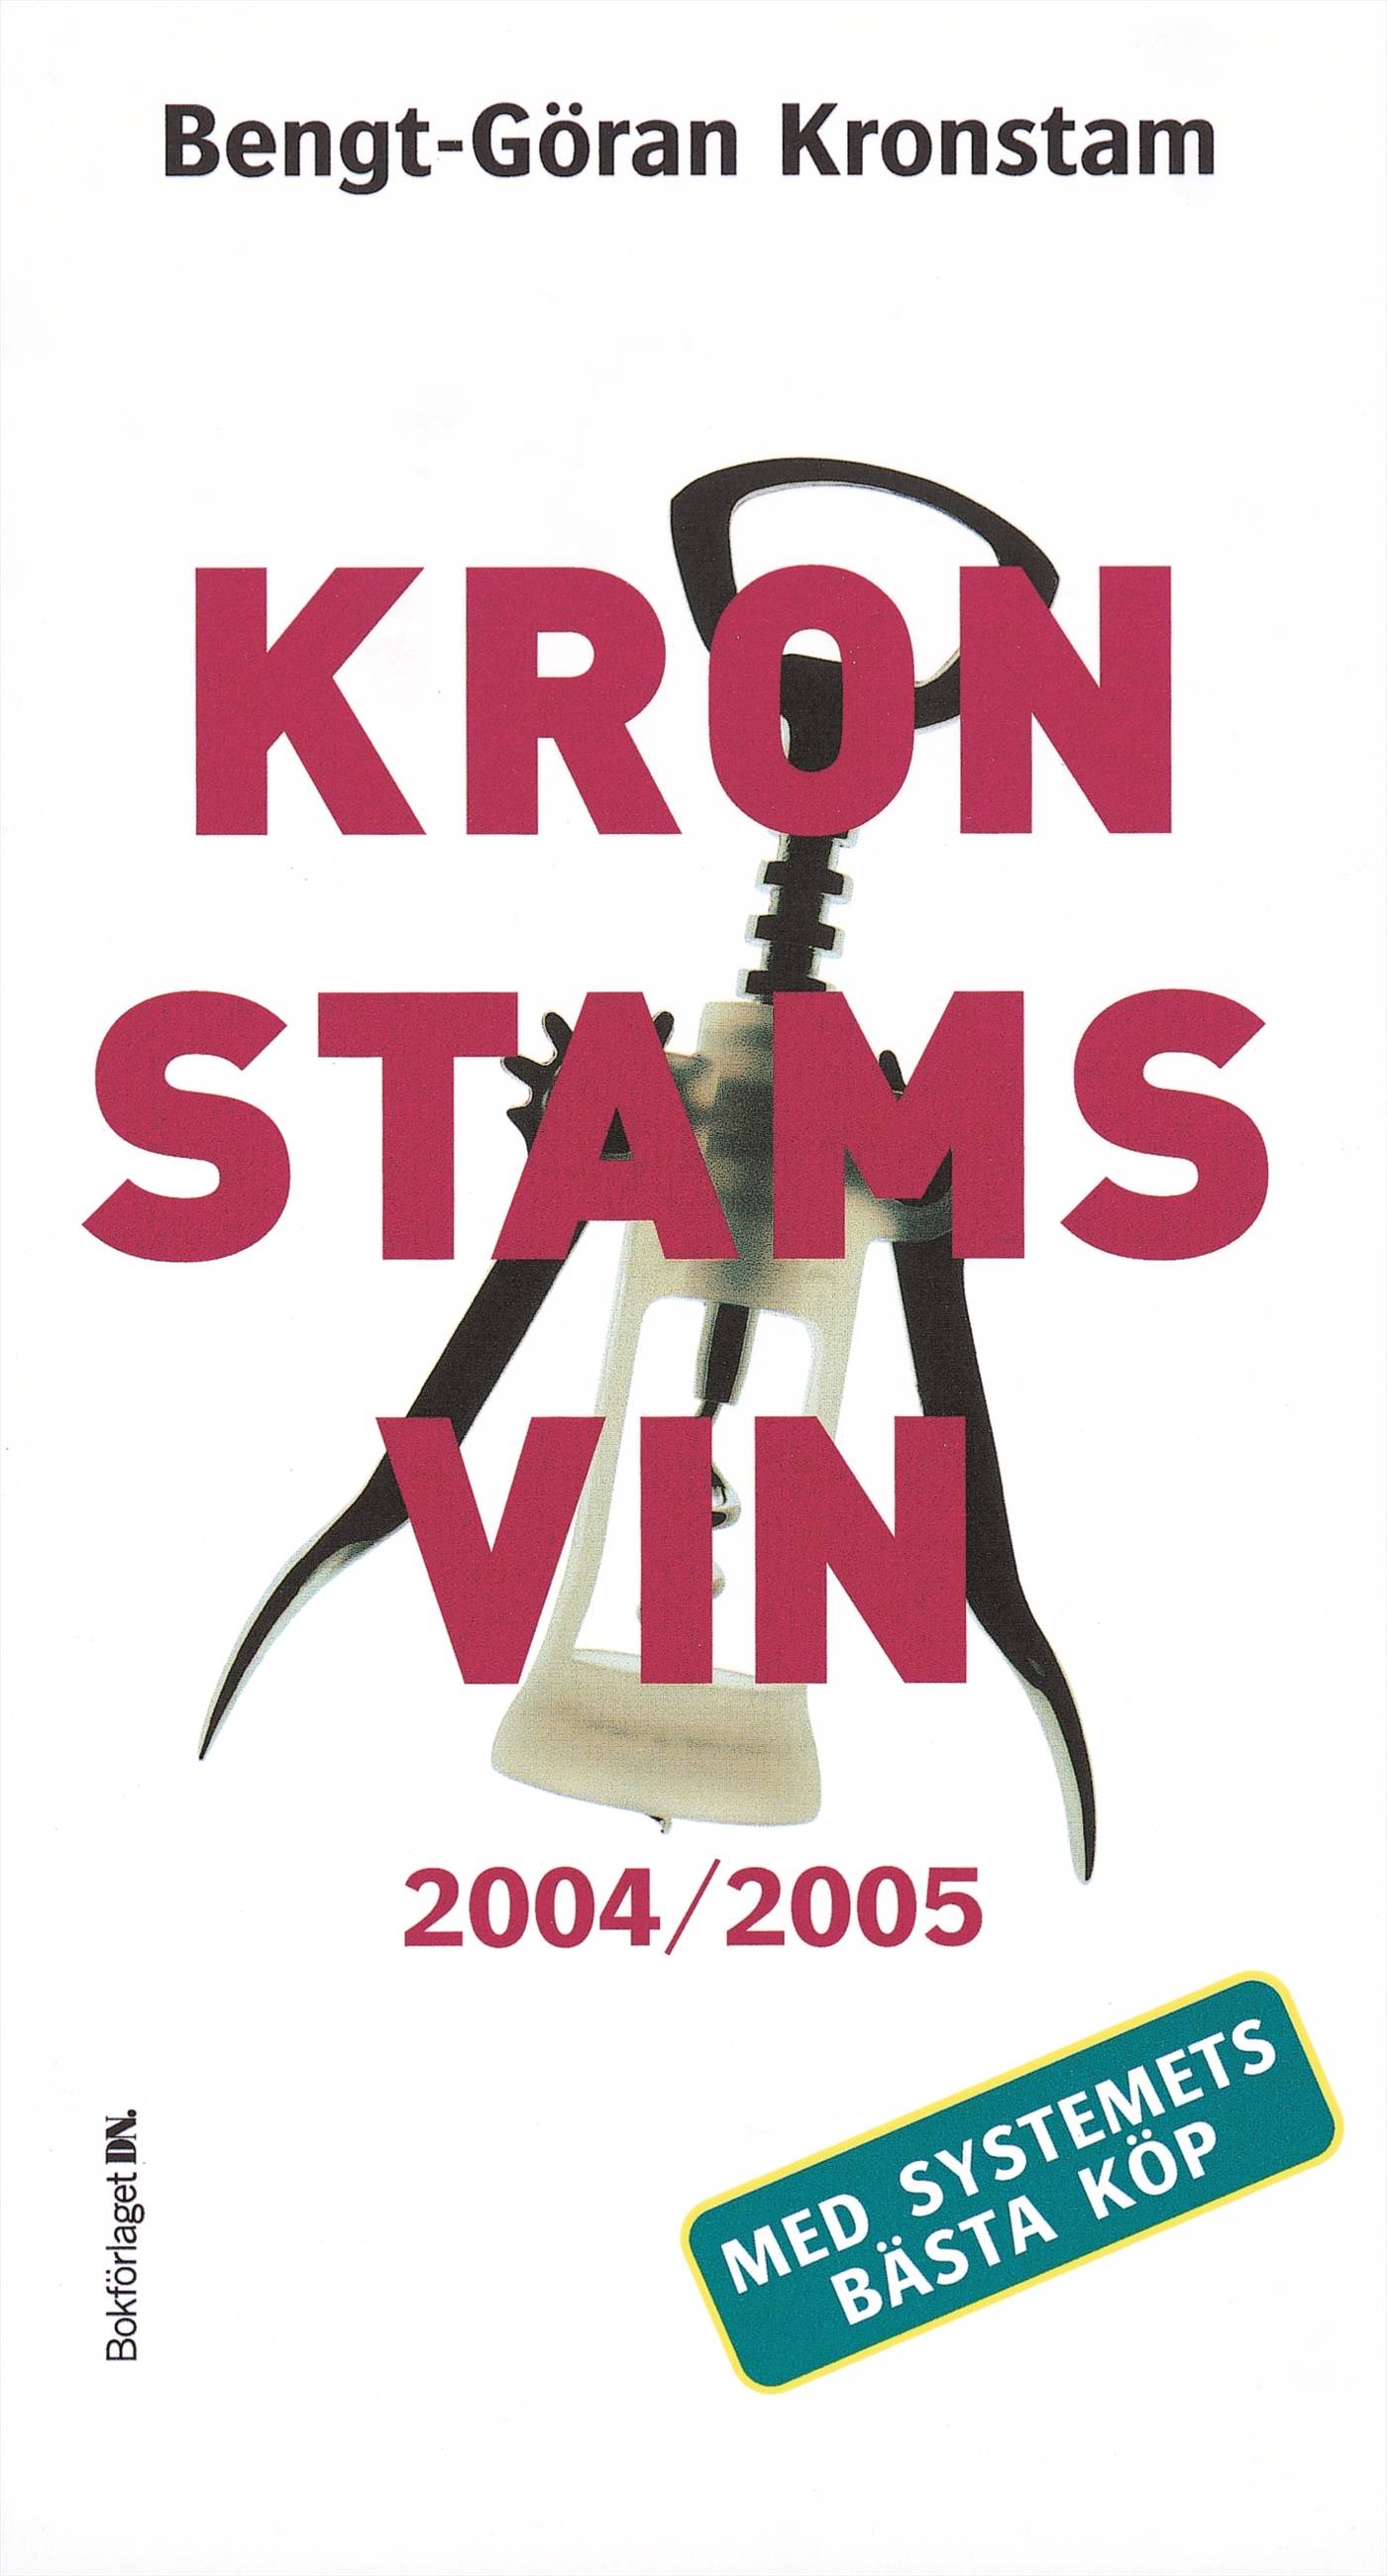 Kronstams vin. 2004/2005